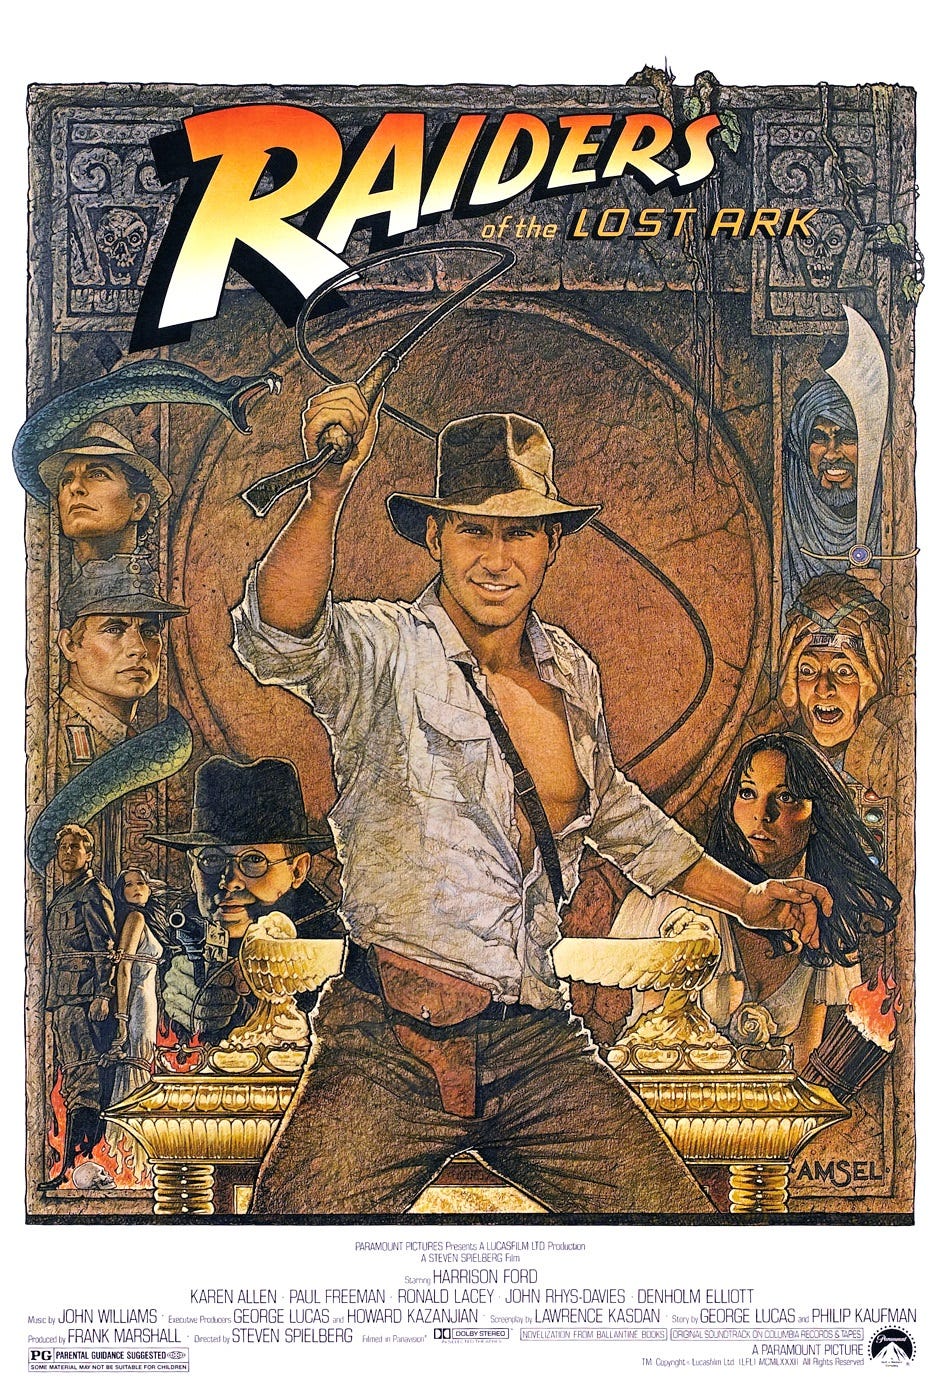 Indiana Jones and the Raiders of the Lost Ark (1981) - IMDb